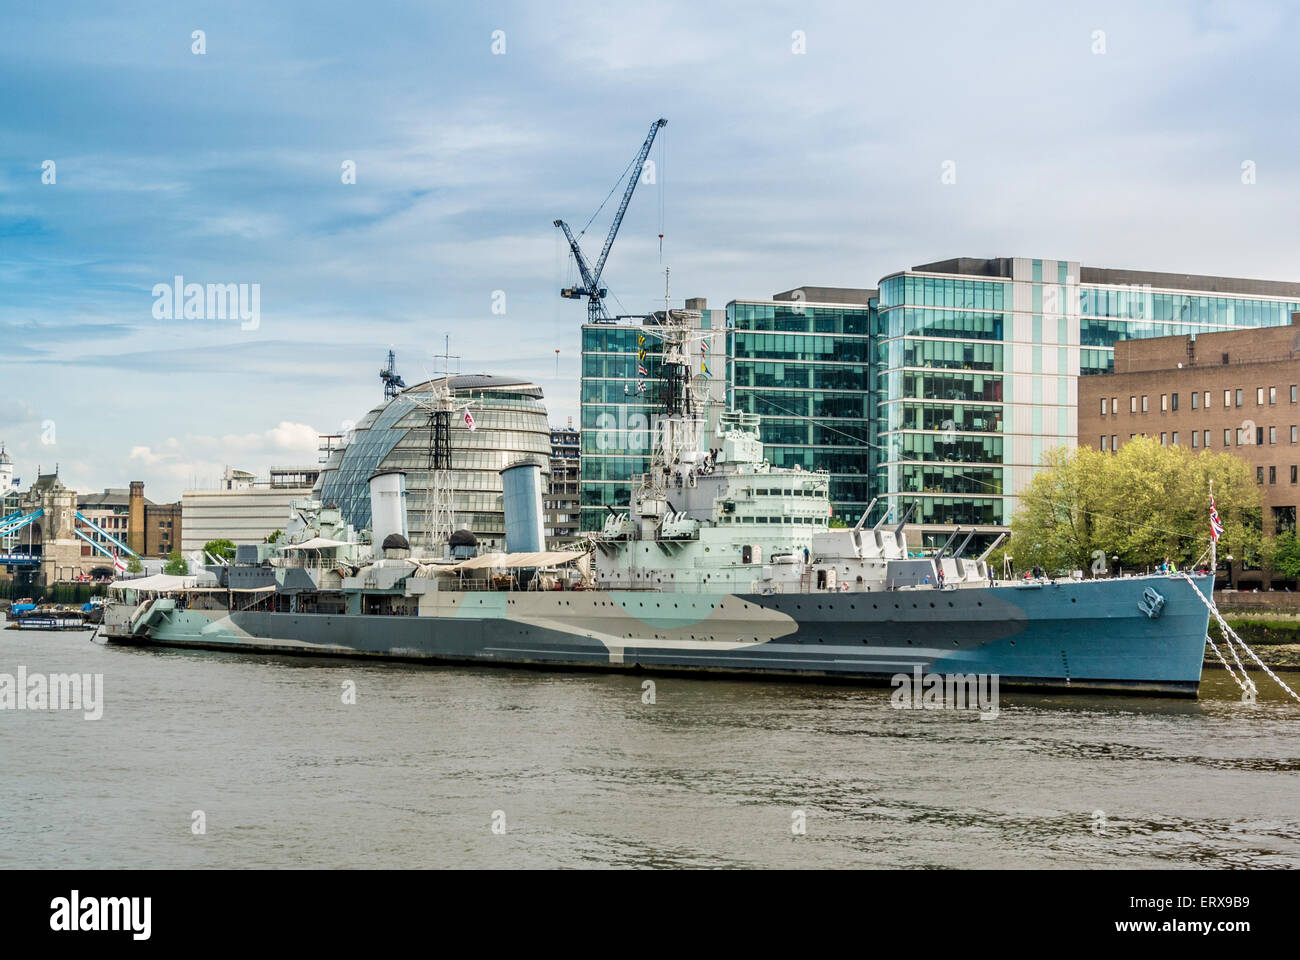 HMS Belfast on the River Thames, London, UK. Stock Photo